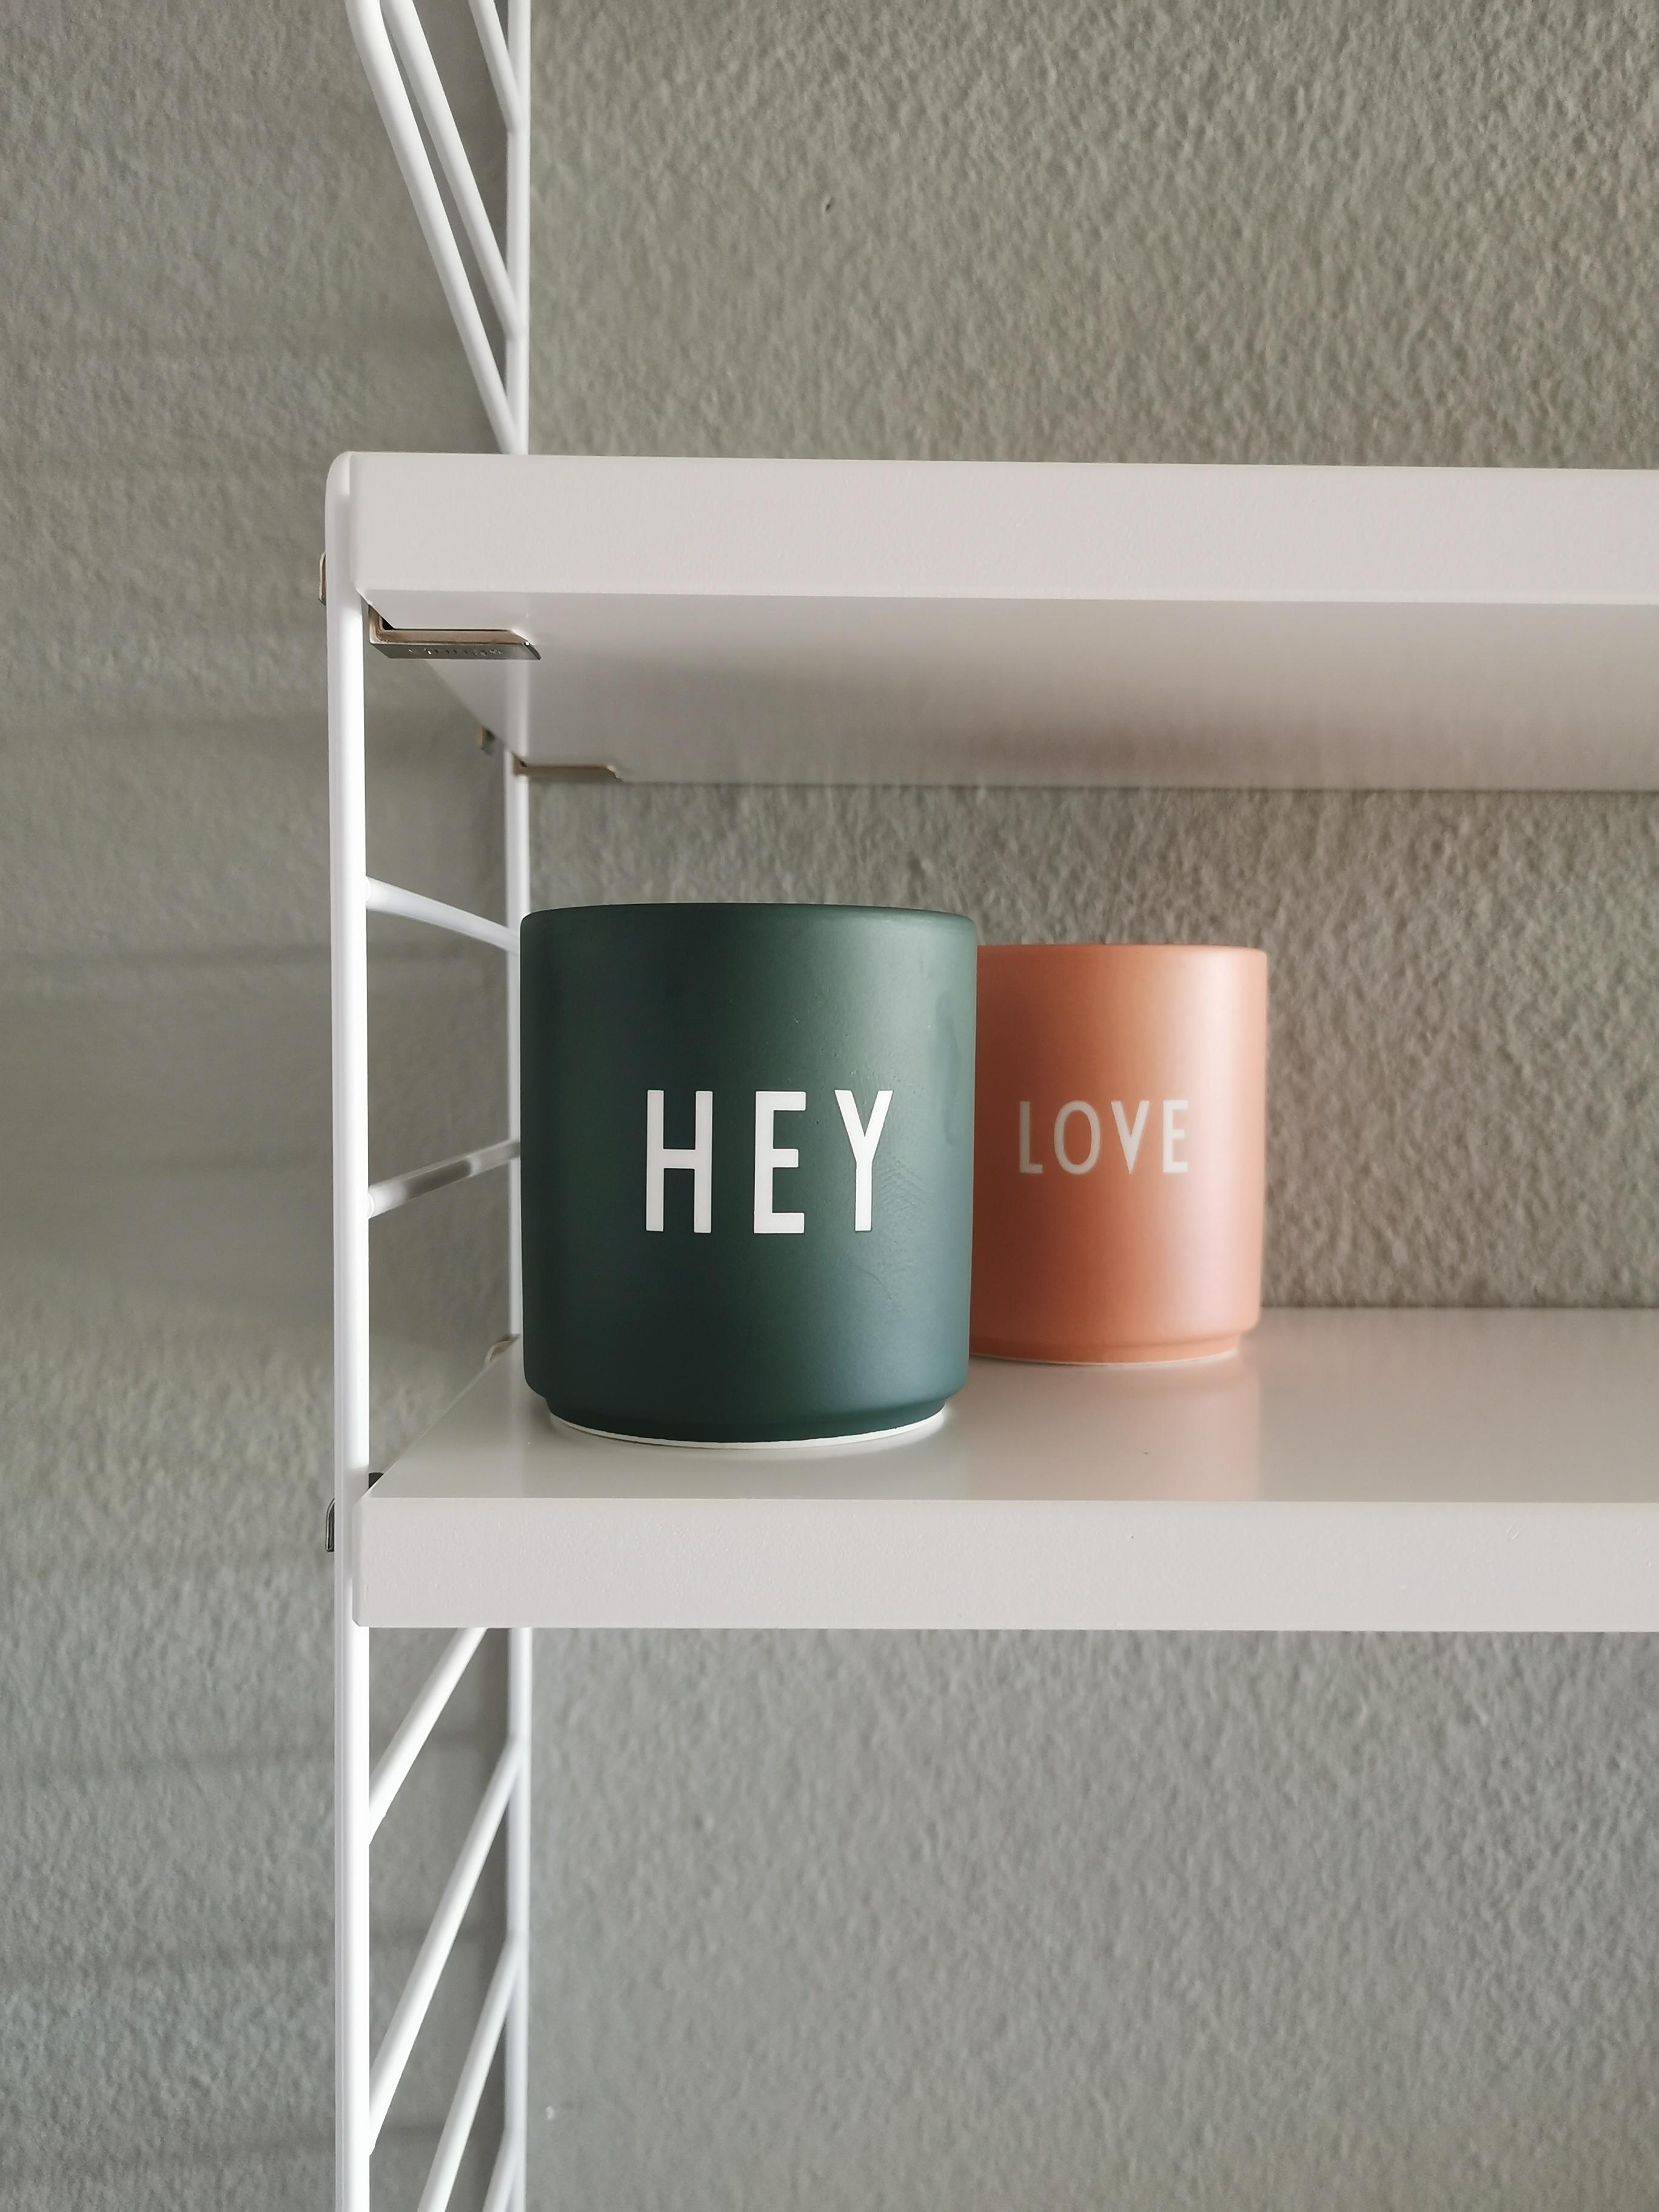 Hey Love!
#designletters #heylove #coffeelover